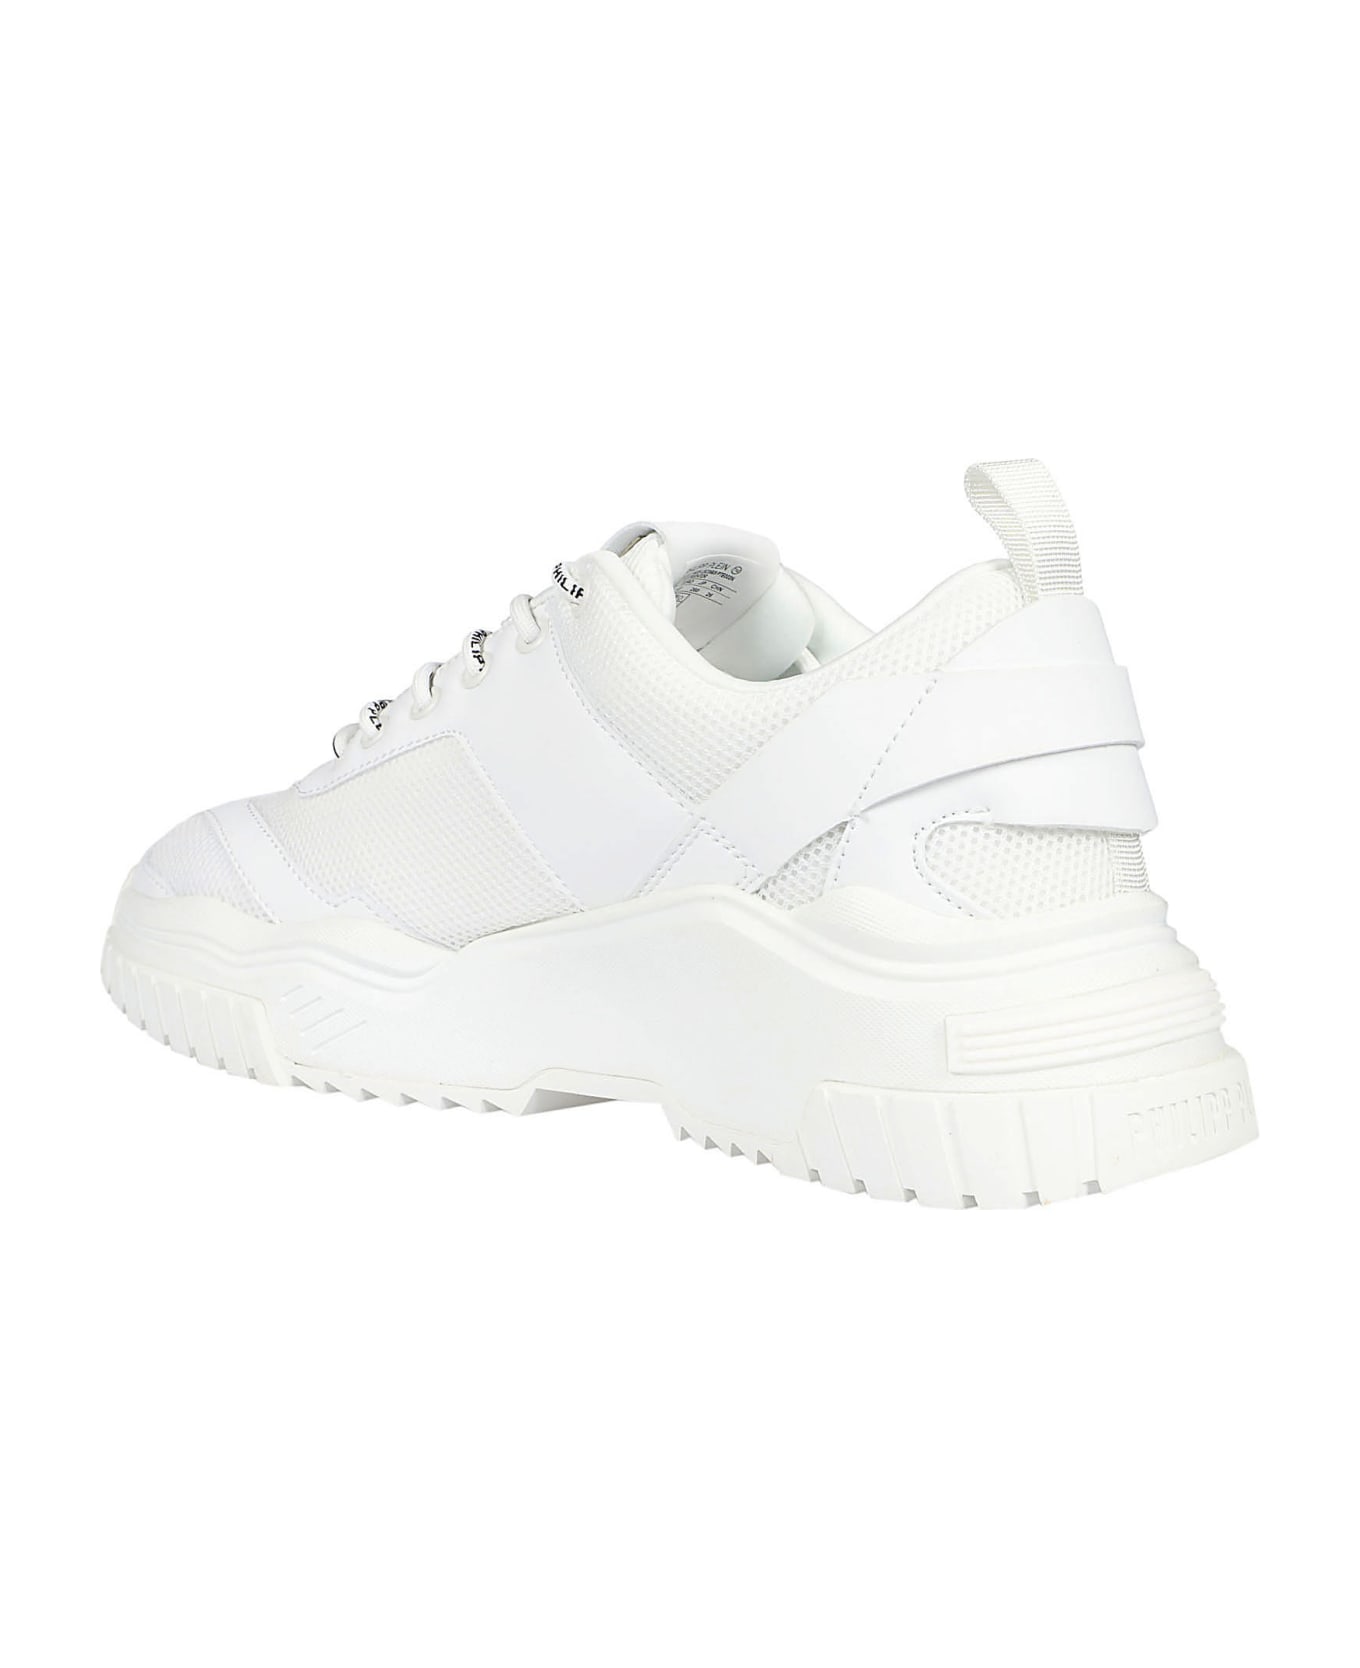 Philipp Plein Predator Sneakers - White/white スニーカー